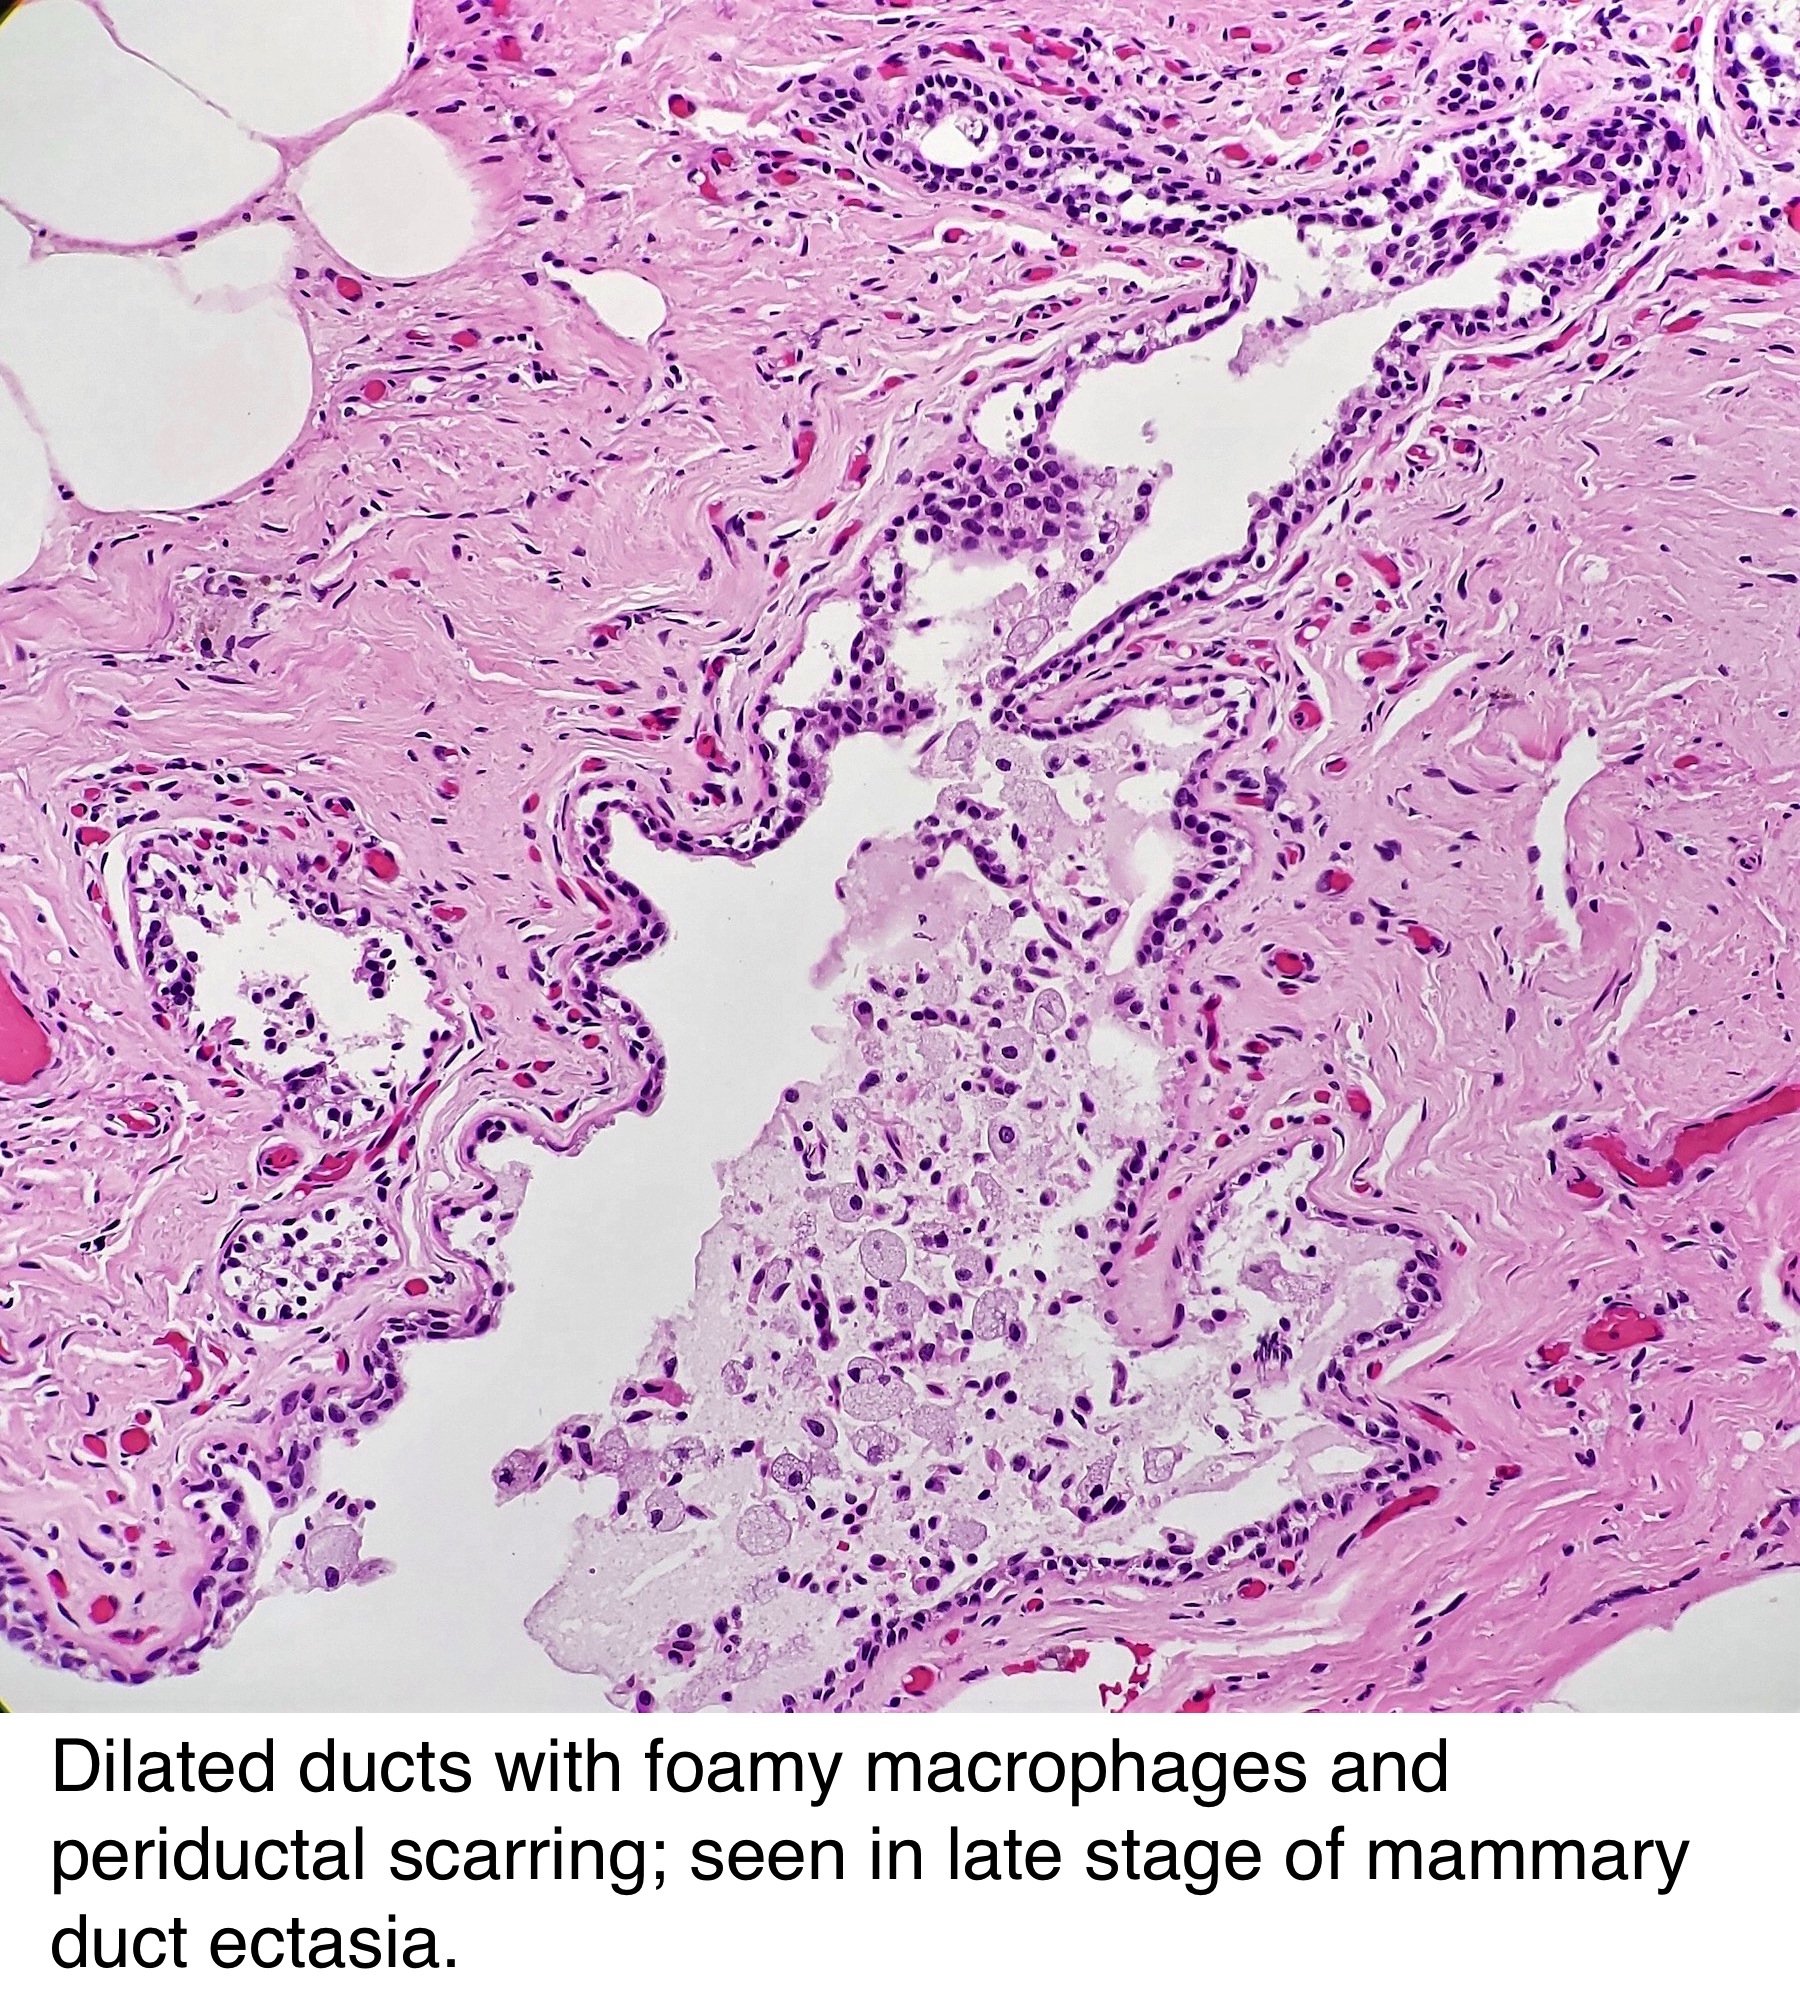 Pathology Outlines Duct Ectasia